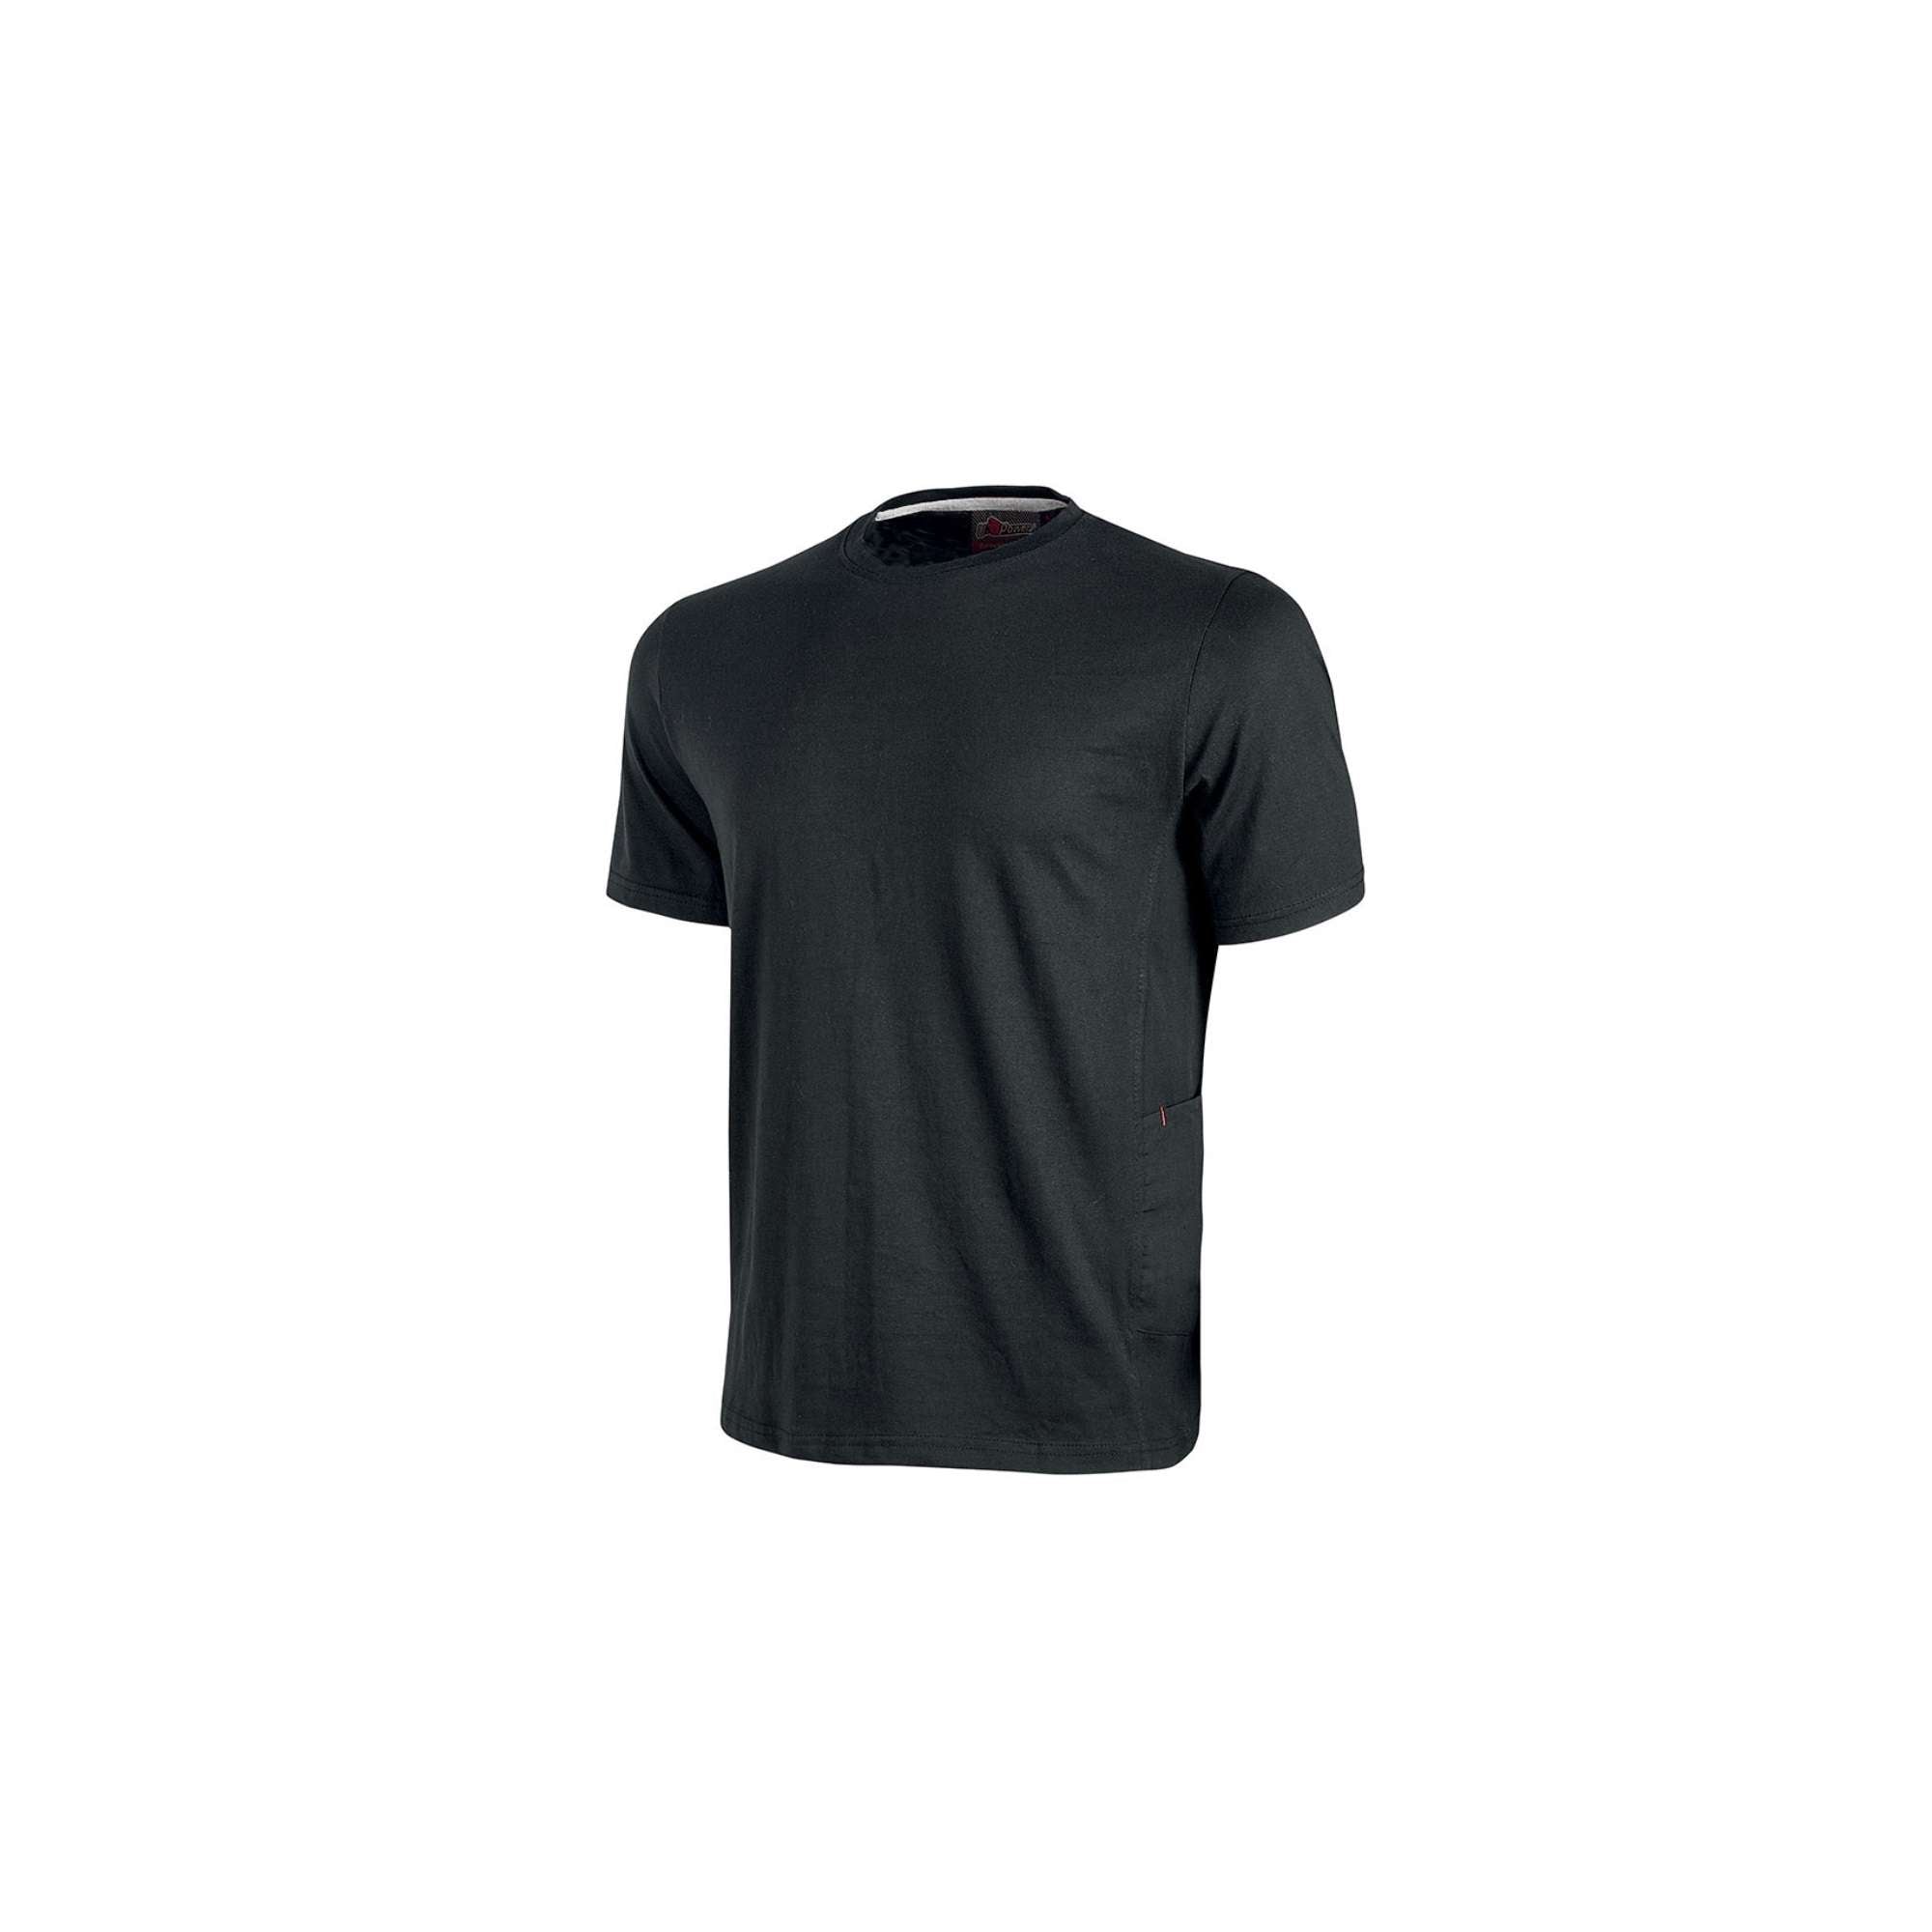 T-Shirt black carbon - U-Power EY144BC